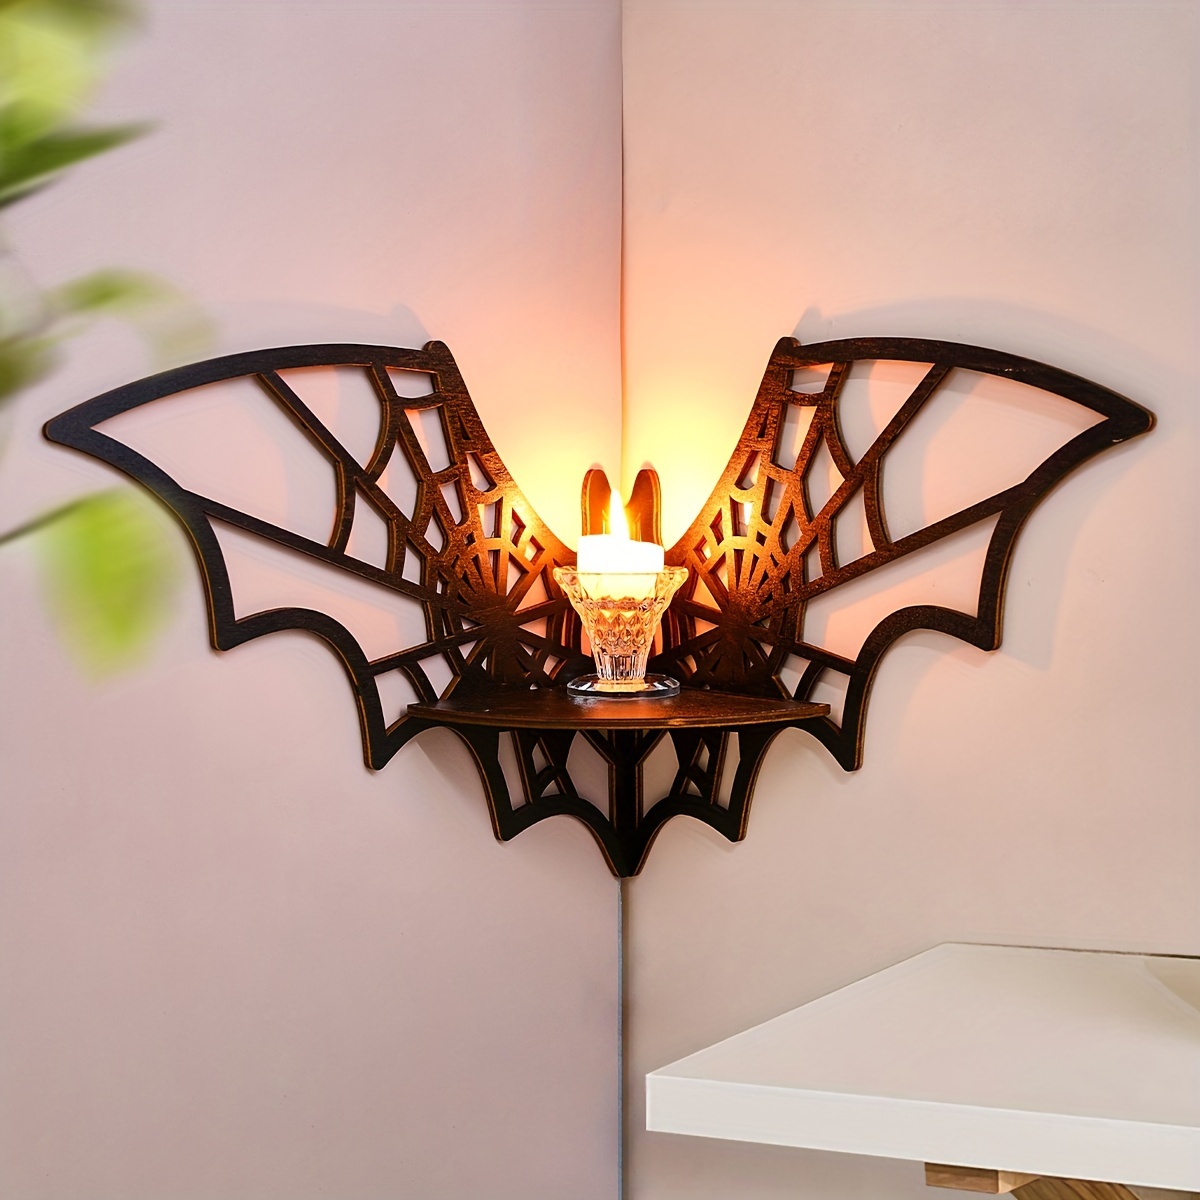 

1pc Creative Minimalist Wall-mounted Display Shelf (nails Not Included), Minimalist Spider Web Bat-shaped Wall Decoration Pendant Decorative Corner Bracket